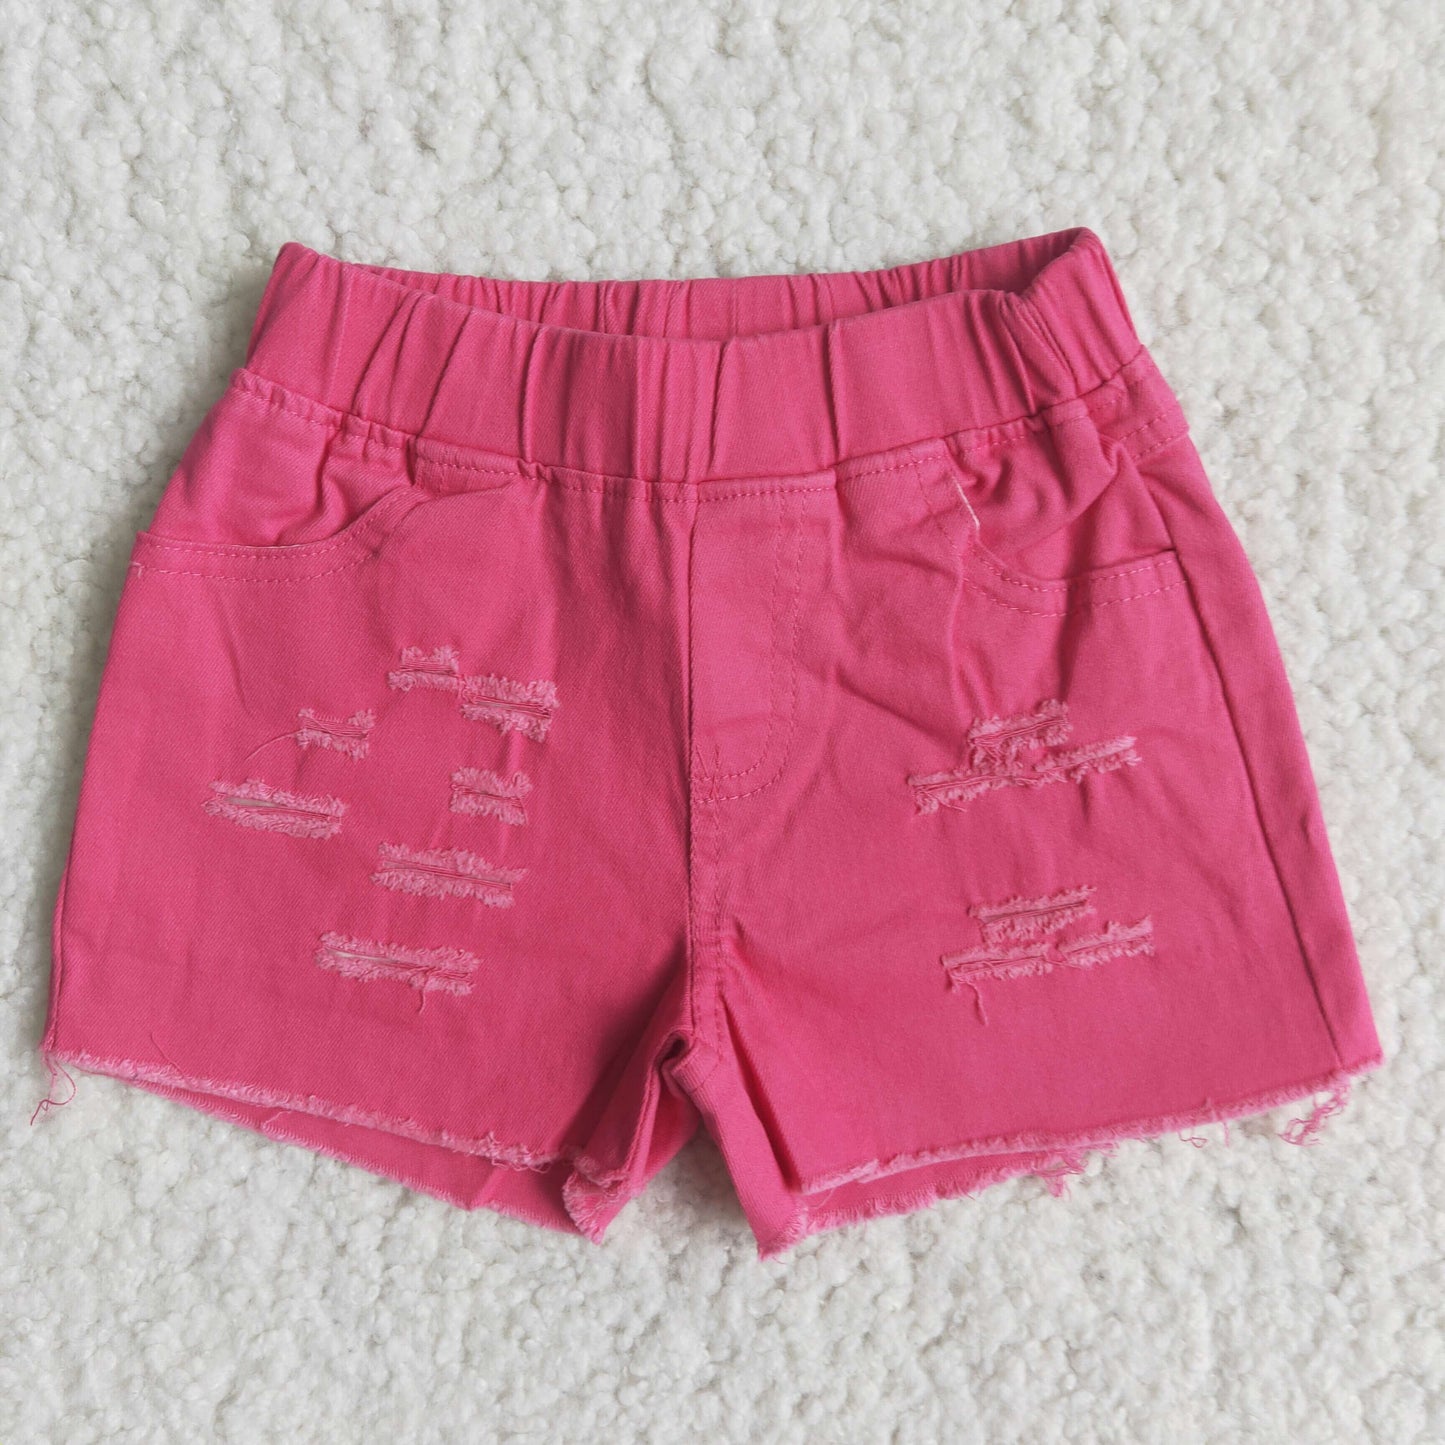 Girls hot pink denim shorts